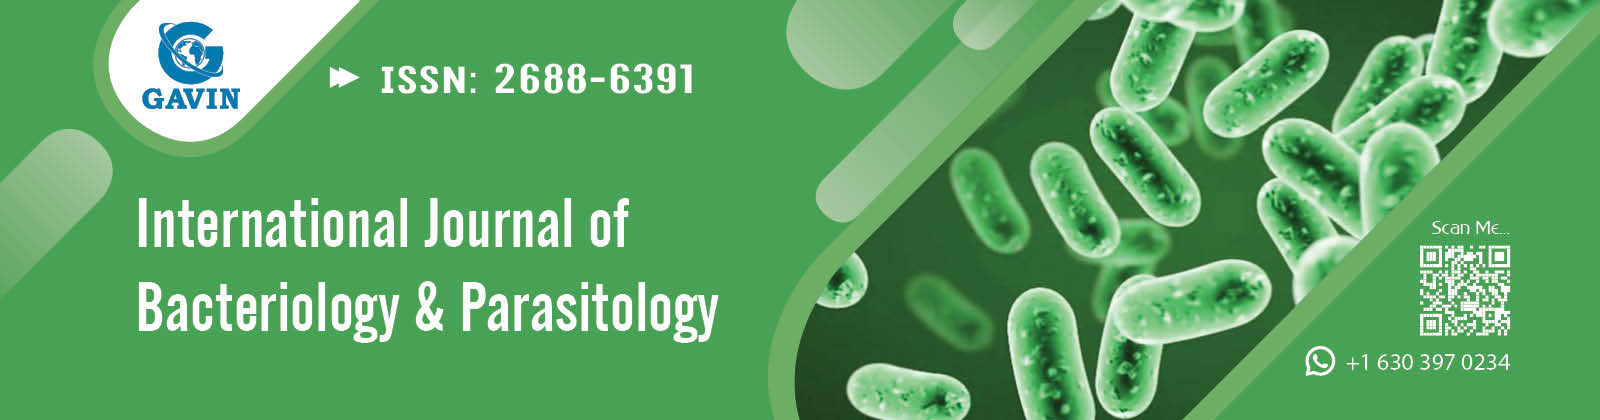 International Journal of Bacteriology & Parasitology